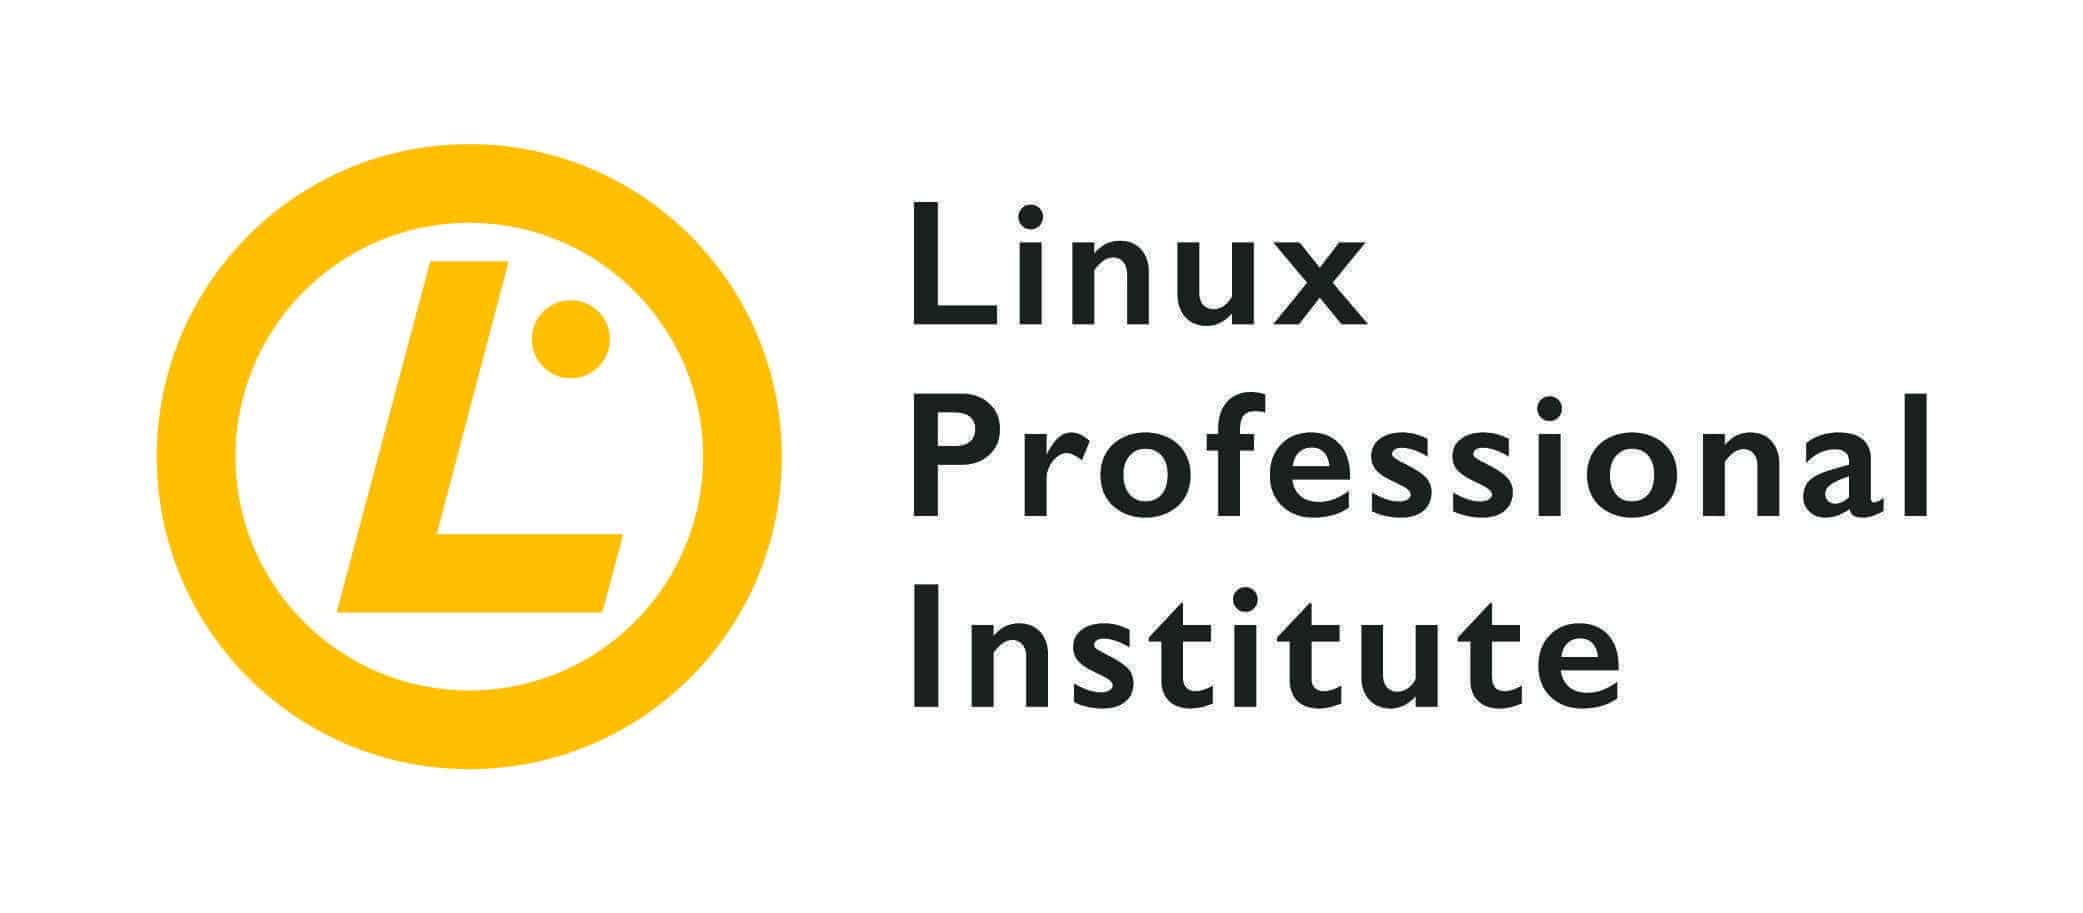 101-400 Exam Dumps Get Free Access online 4 Linux Certification